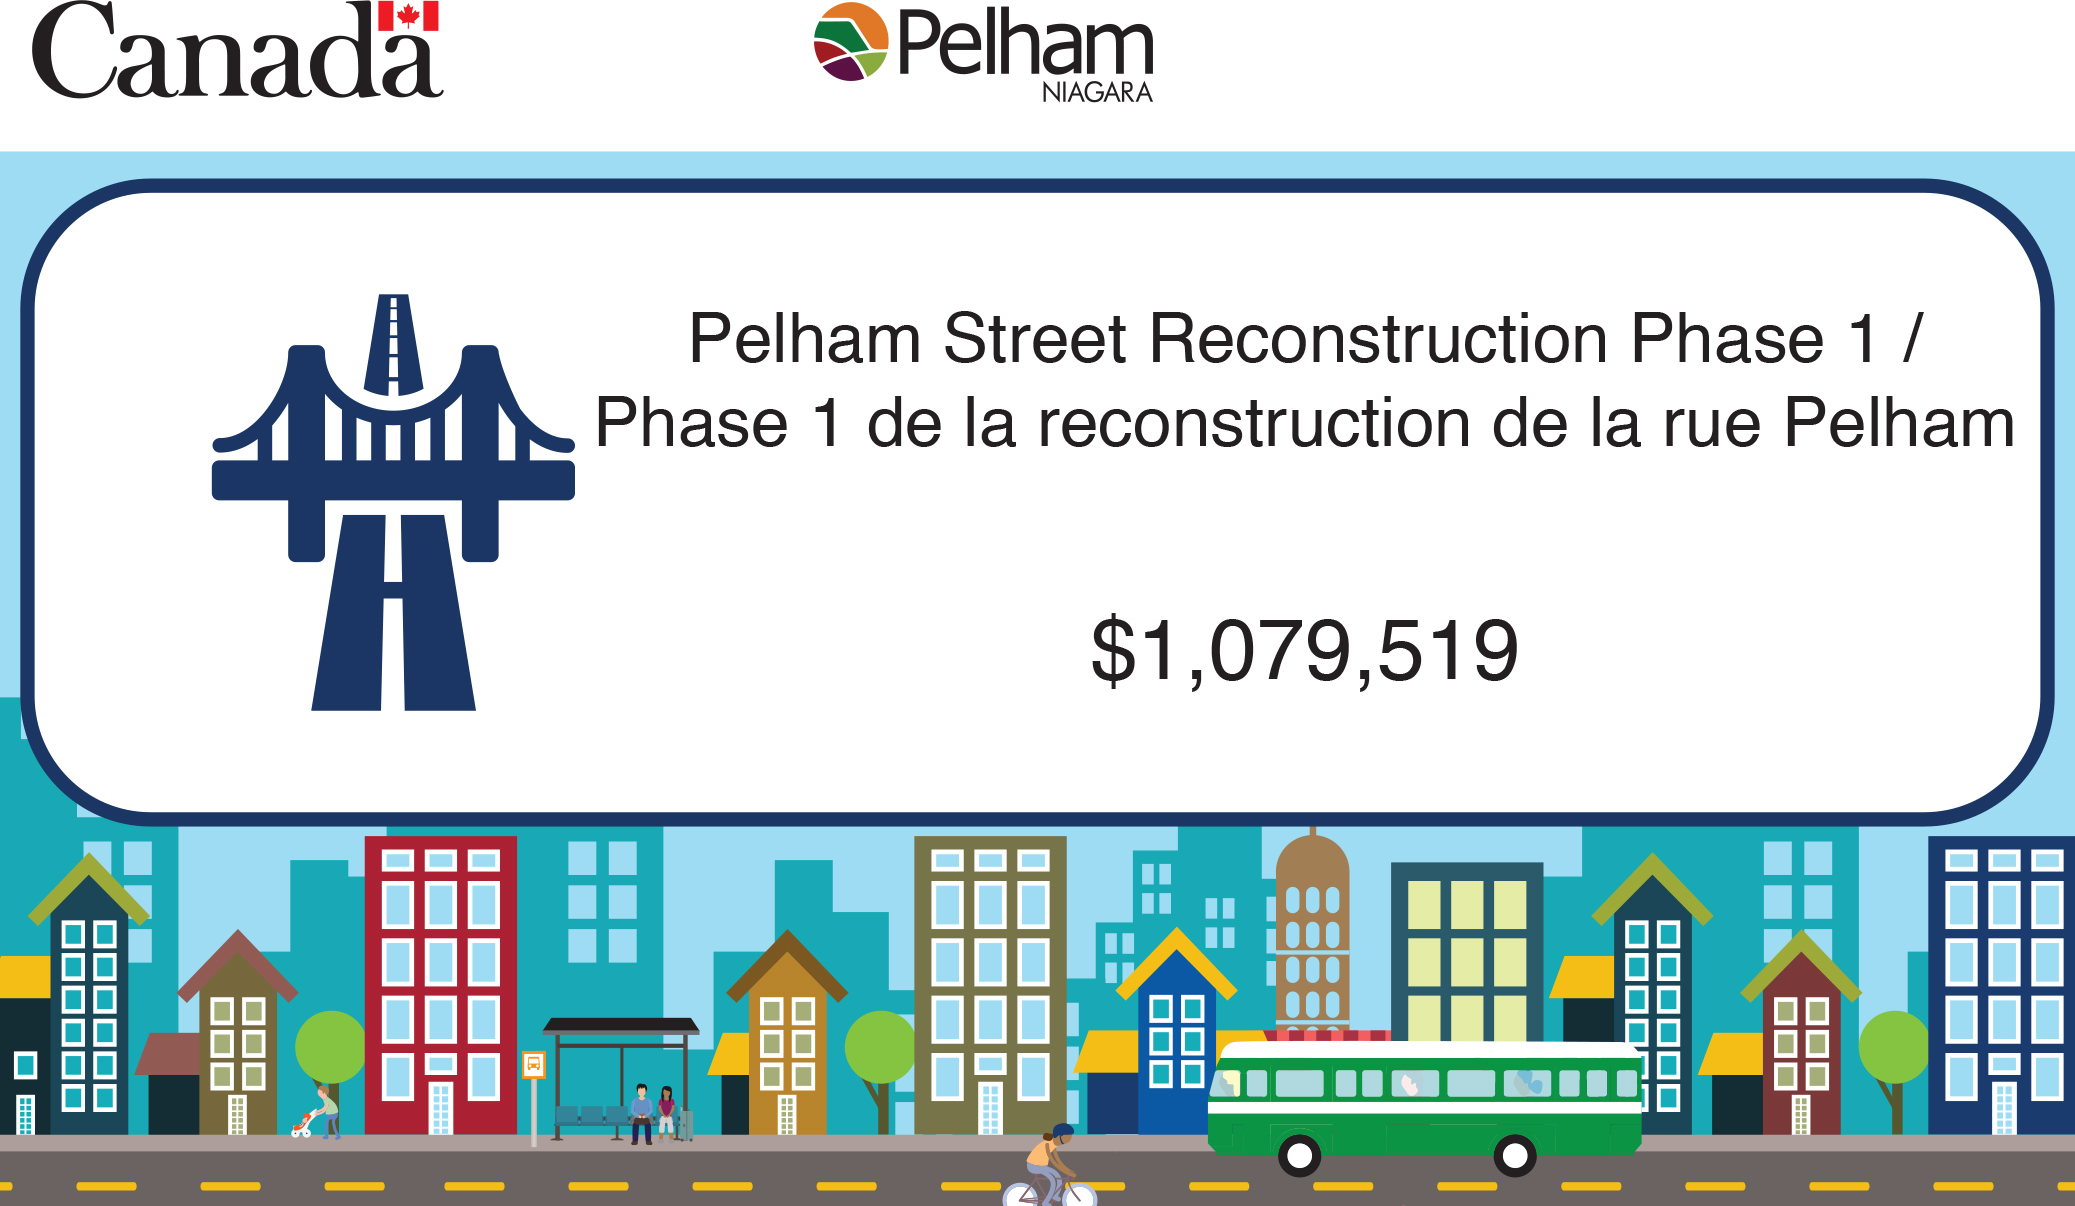 gas tax digital sign for pelham street reconstruction